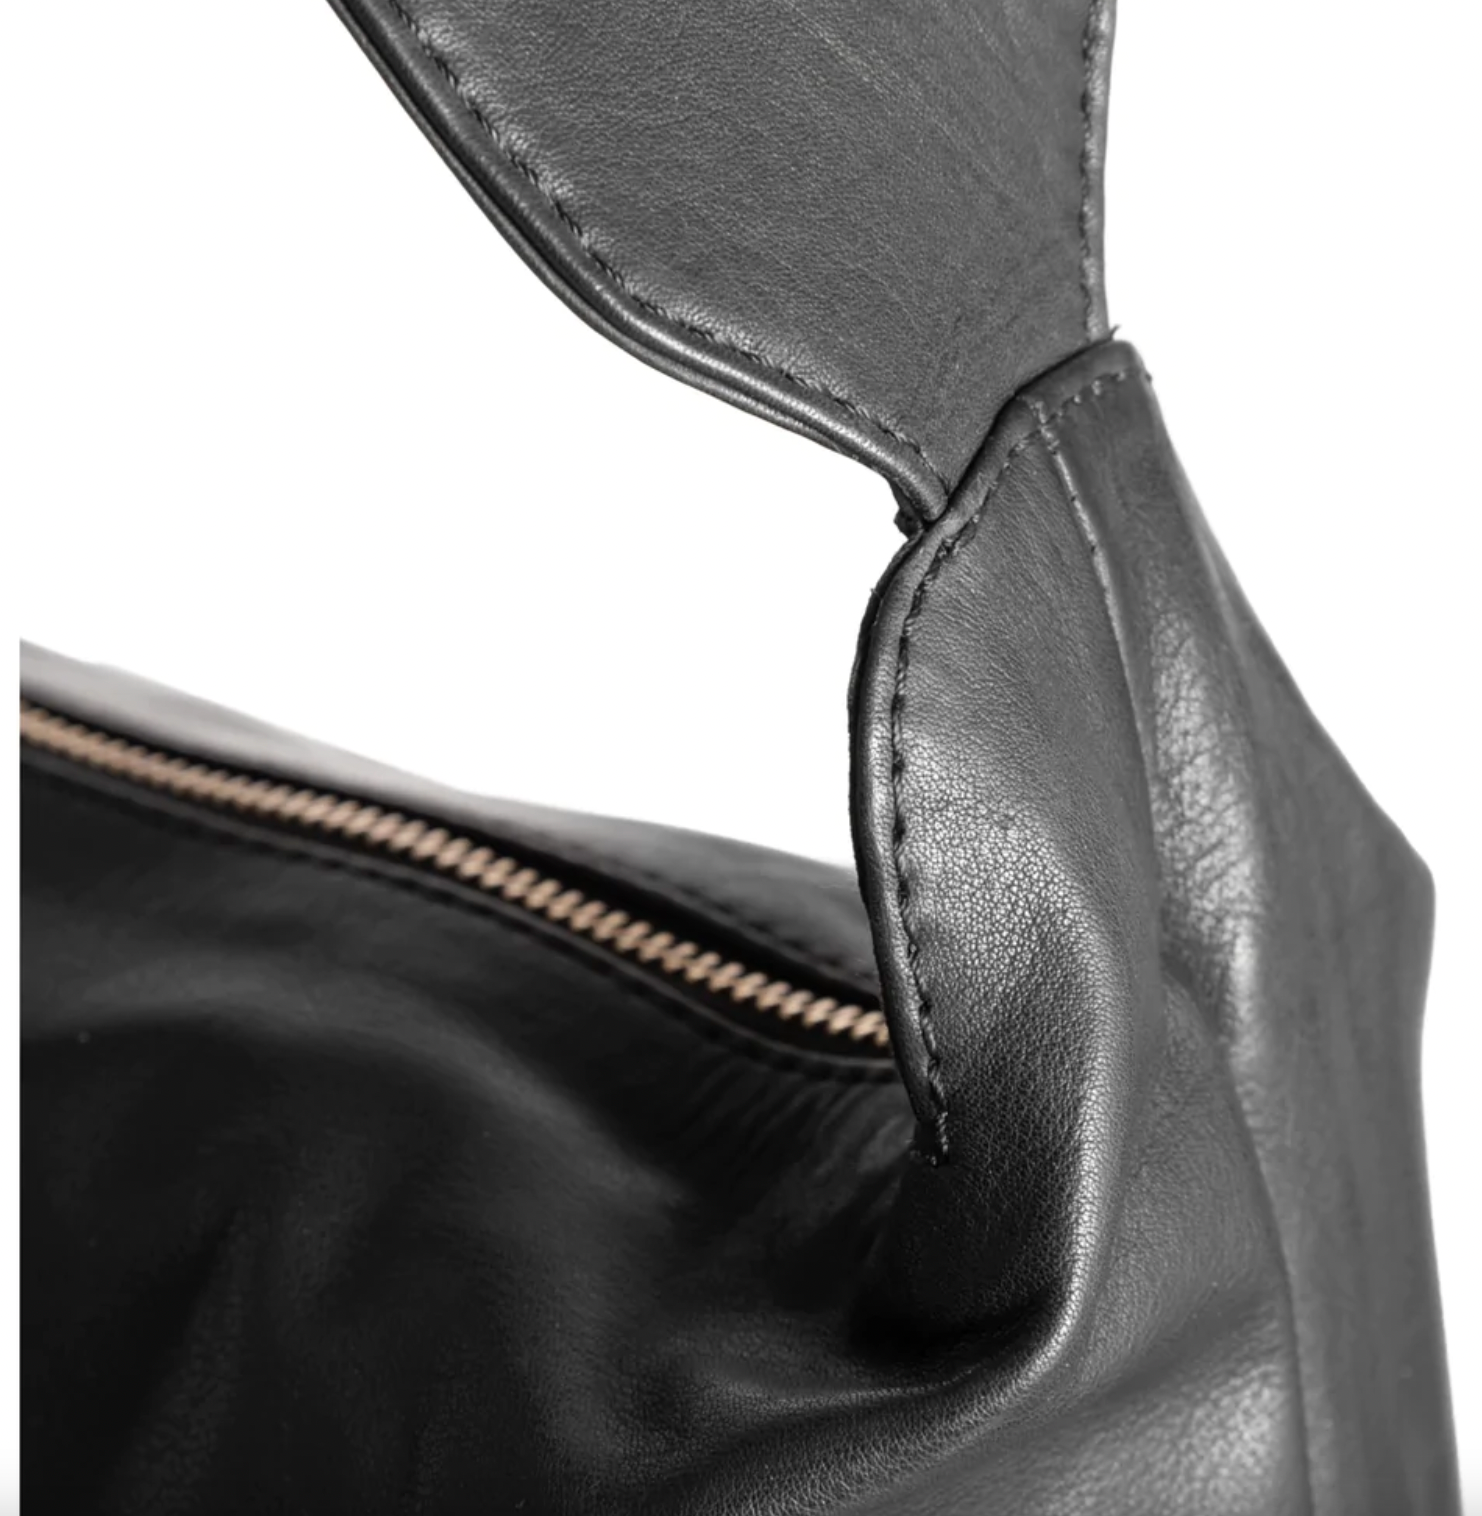 Depeche leather mobile bag - itso me